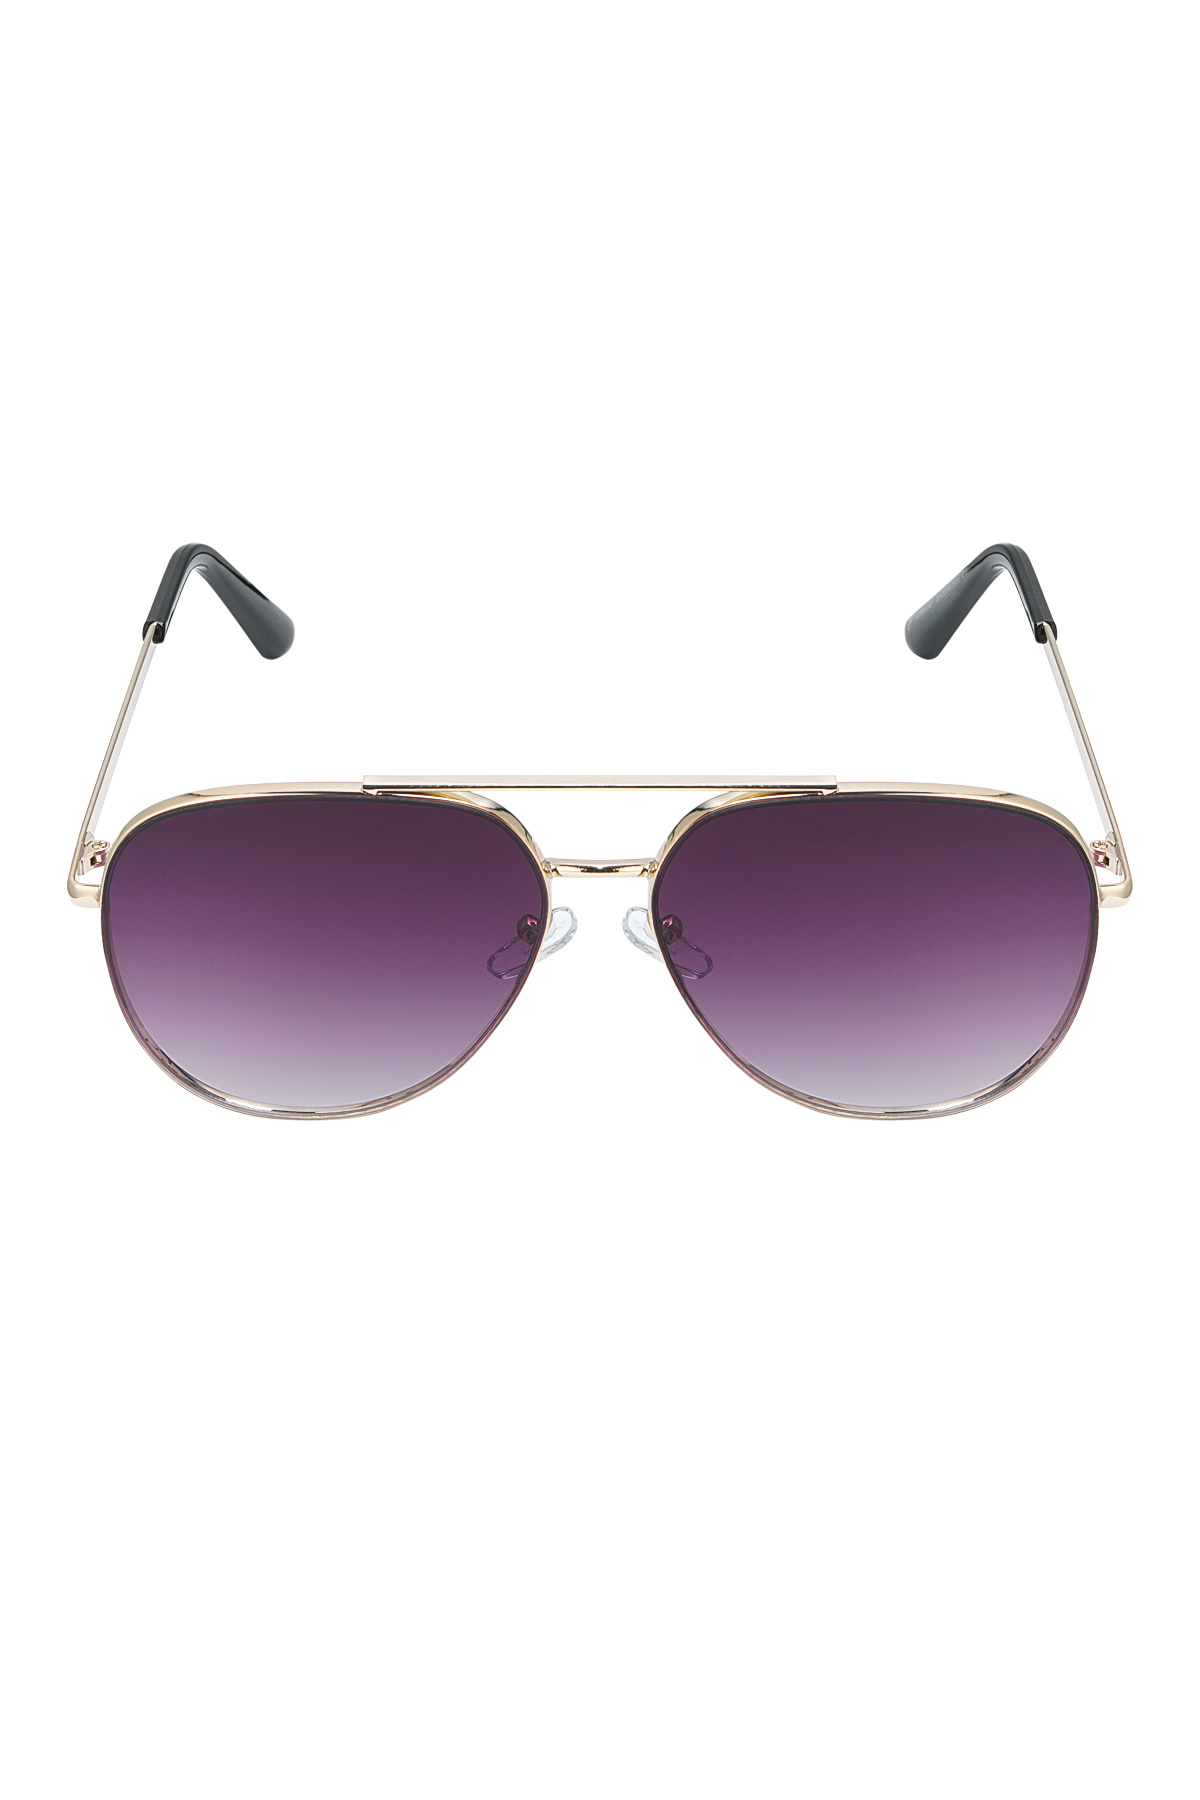 Pilot sunglasses - dark purple h5 Picture5